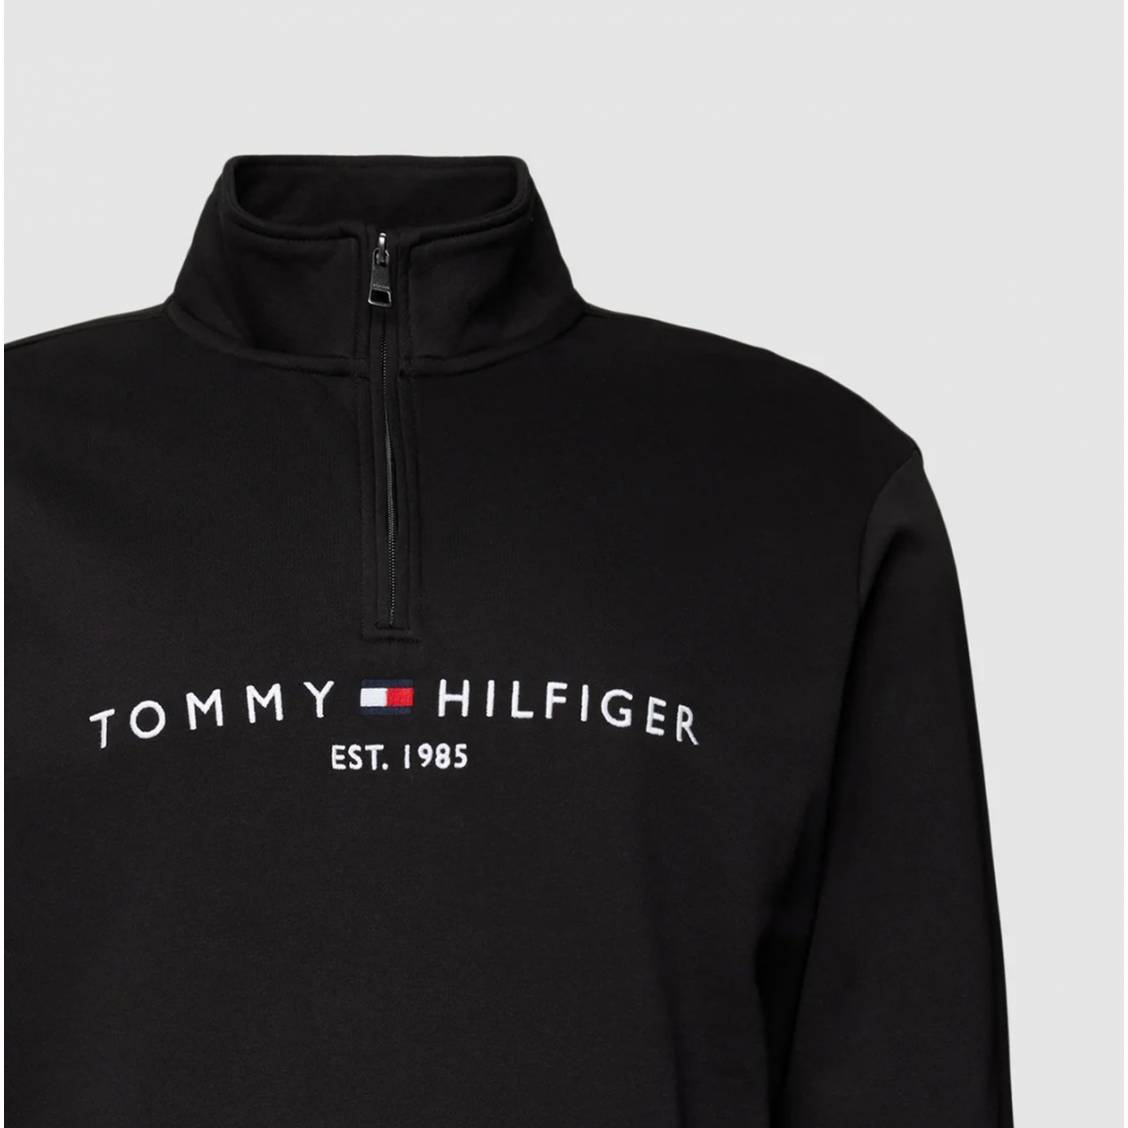 Tommy Hilfiger - Sweat avec logo brodé et col zippé - Bleu marine